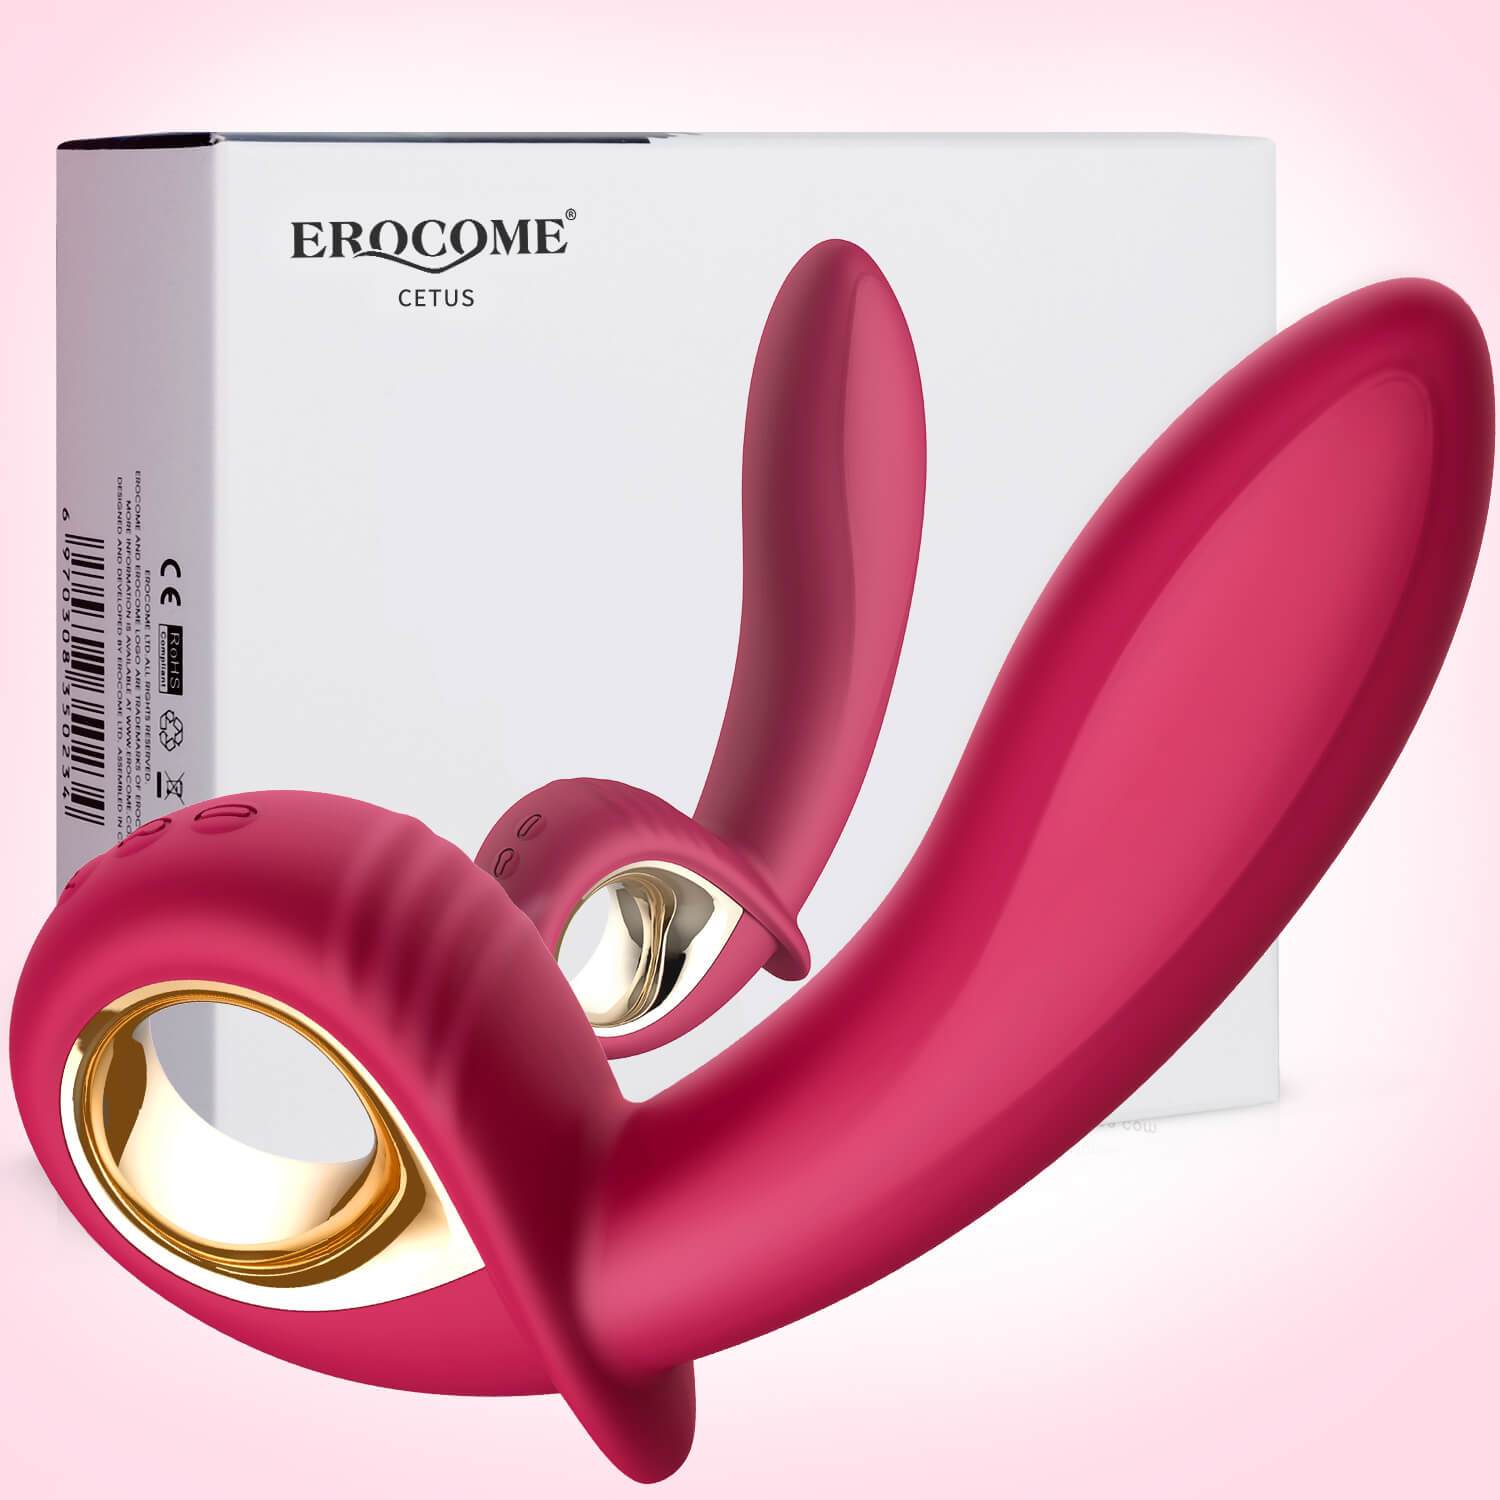 Inflatable Big Dildo Clitoris Stimulate Vibrators